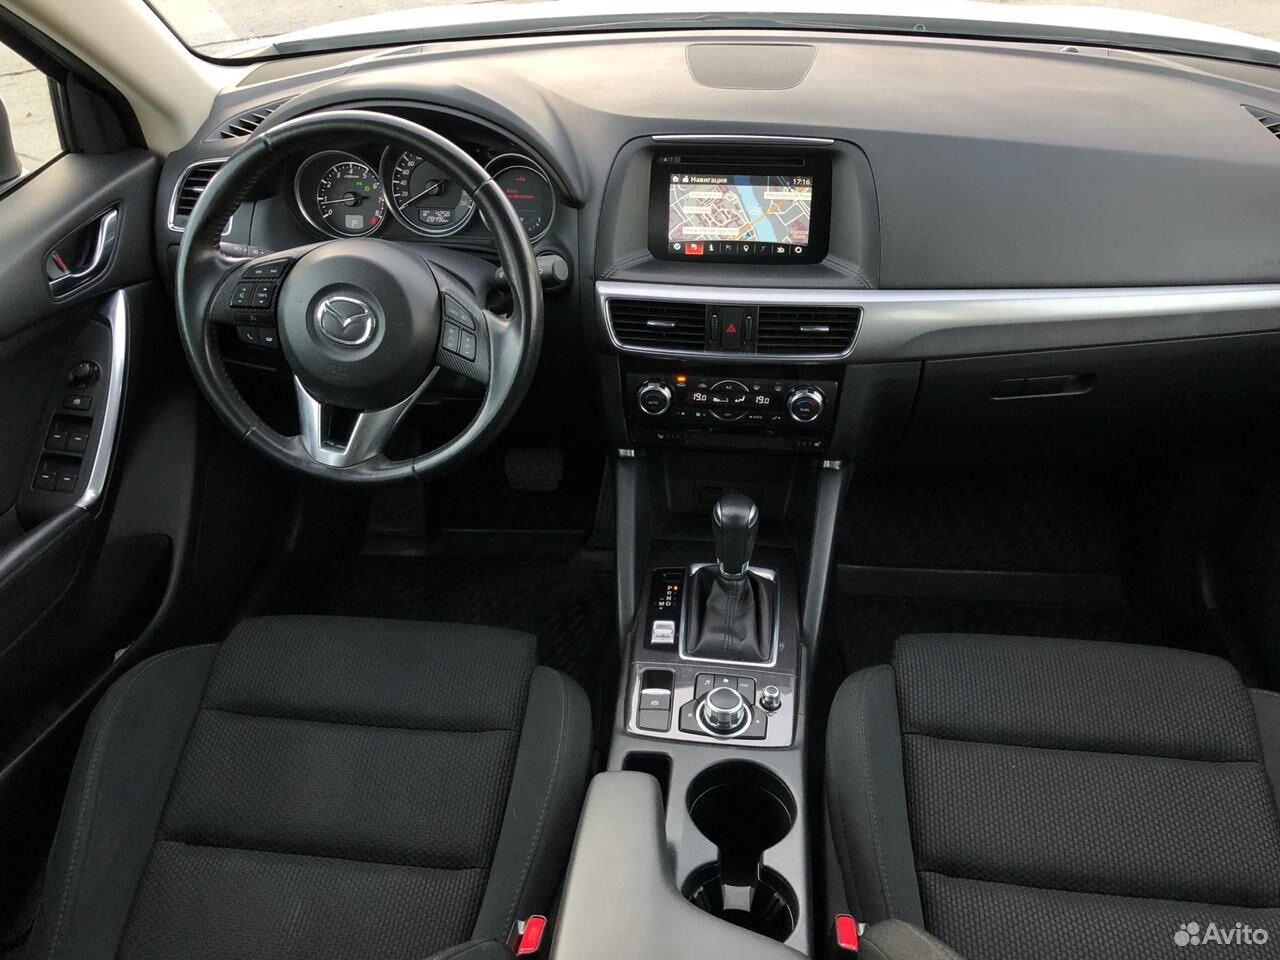 Сх 5 механика. Бардачок Mazda CX-5. Mazda CX 5 педали. Mazda CX 5 fuse Slot. Mazda CX 5 II крепление для смартфона.